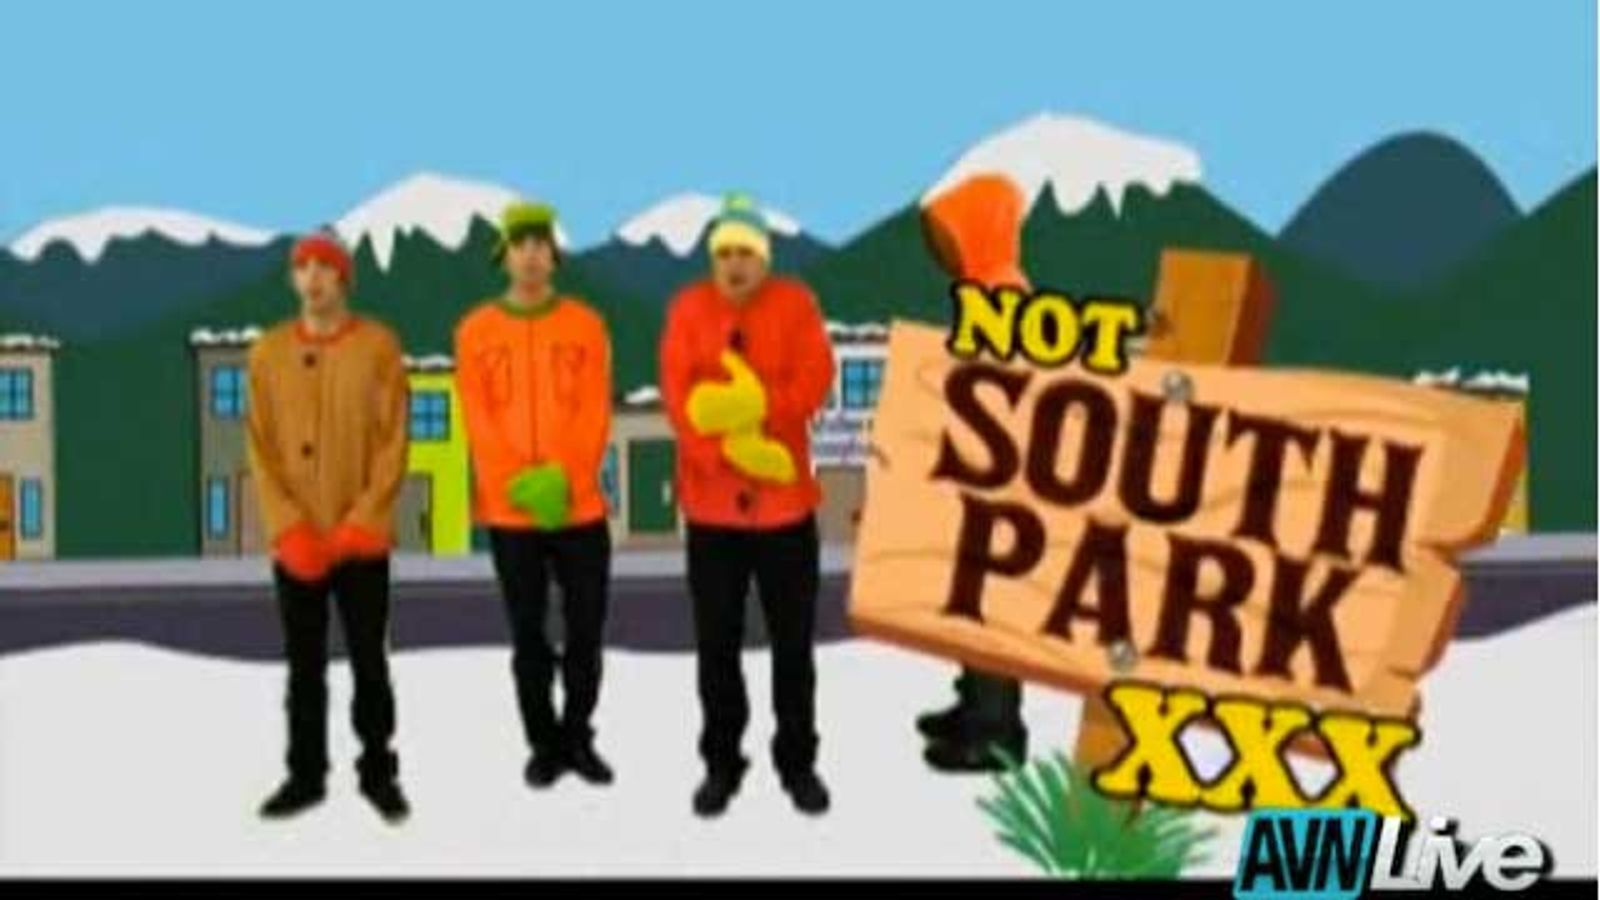 'South Park' Porn Parody Is a Big Hit But Gets Harsh Criticism